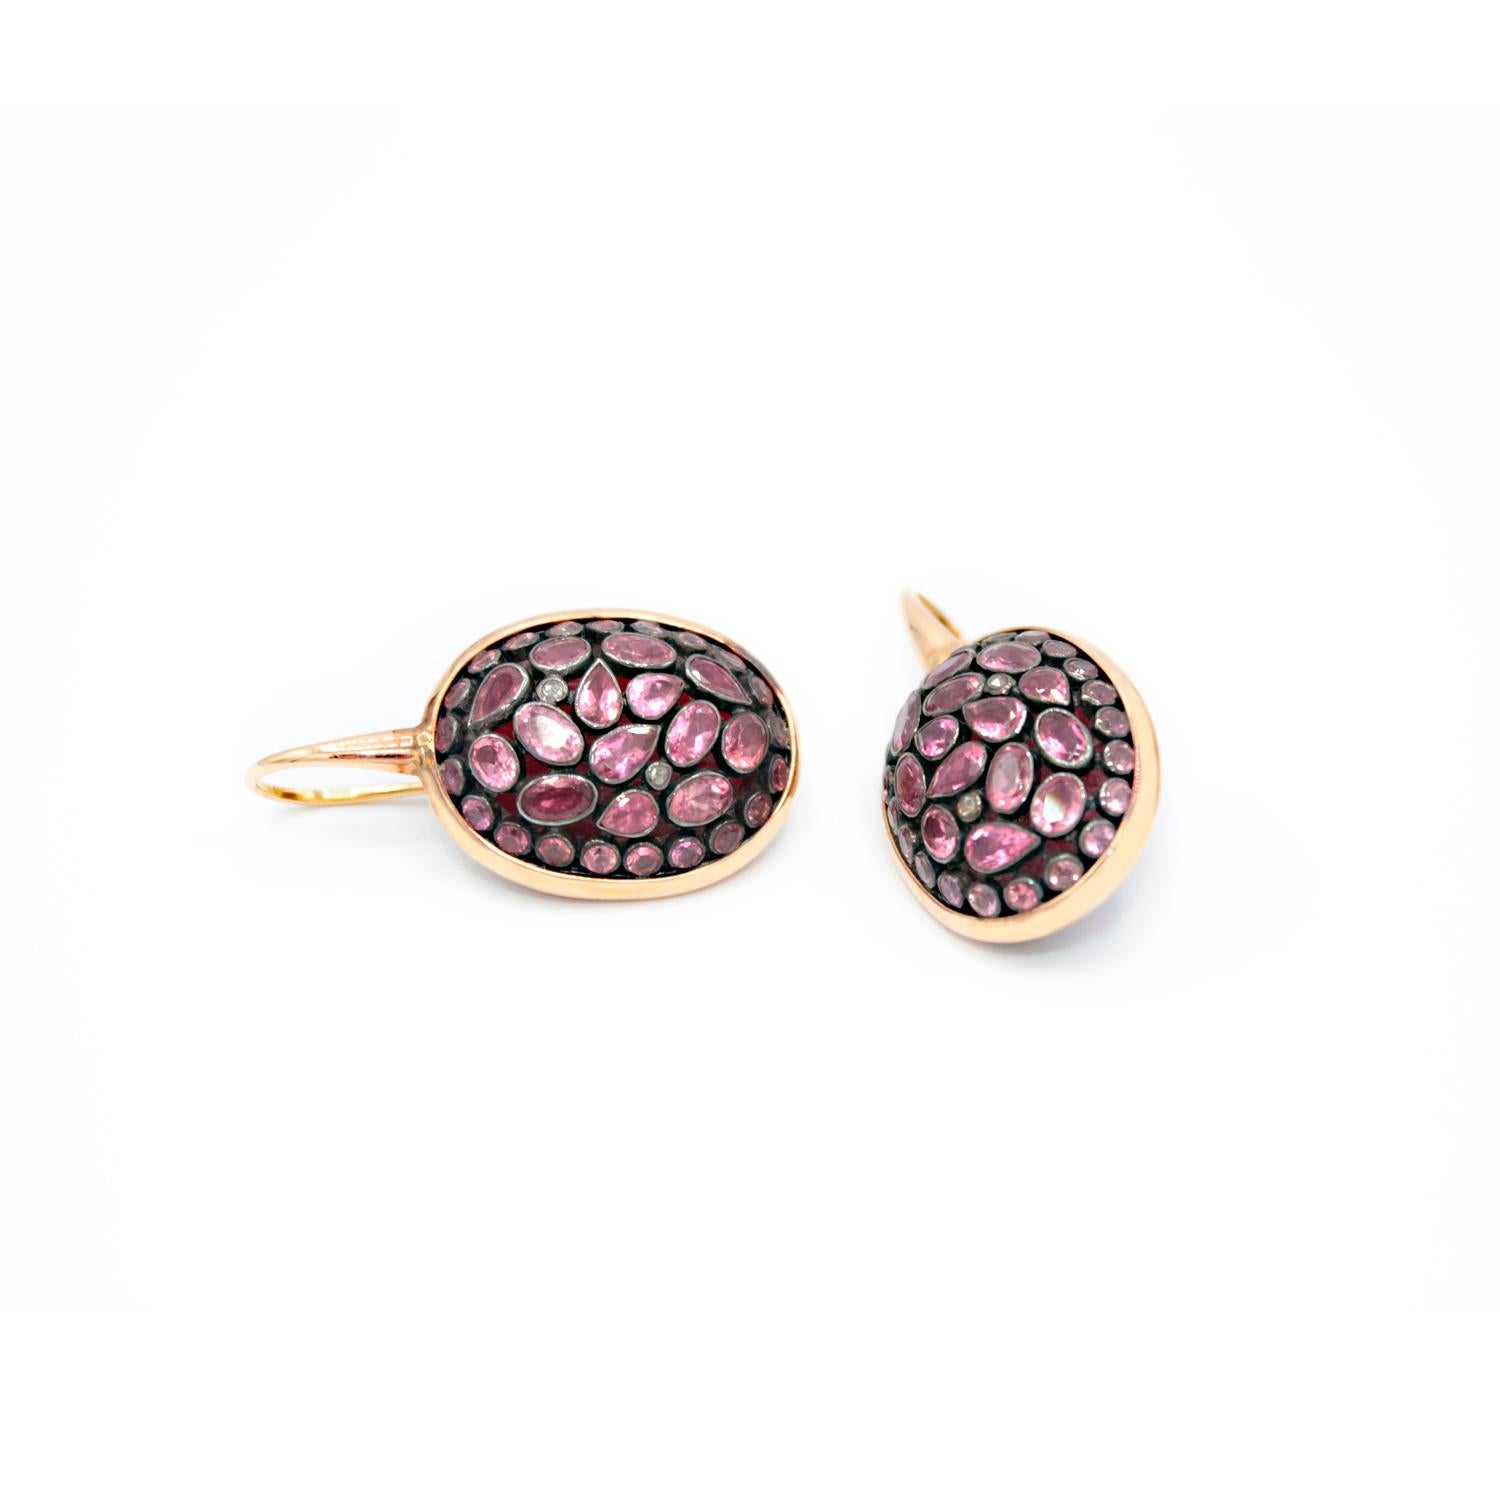 Elegant earrings in 18kt pink gold and pink tourmaline Junaghar cabochon. 
Silver setting
Pink tourmaline g. 7,16
Red bakelite back
Pink Gold g. 4
Hook System

